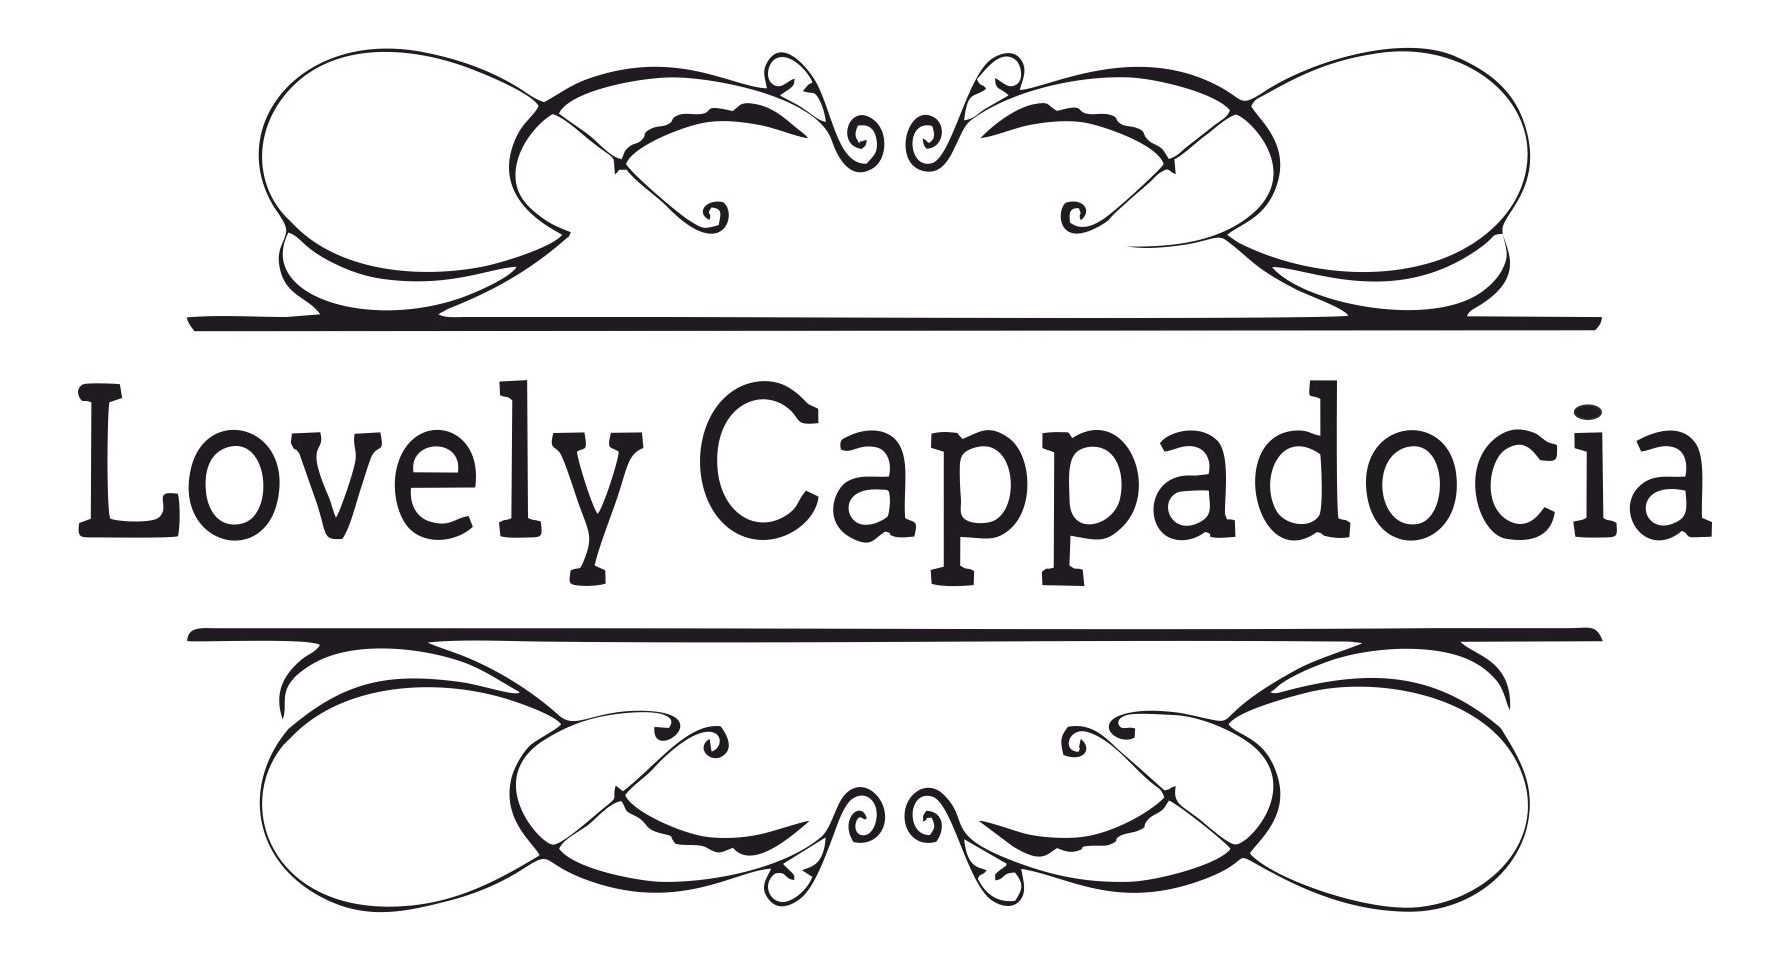 36 - lovely cappadocia